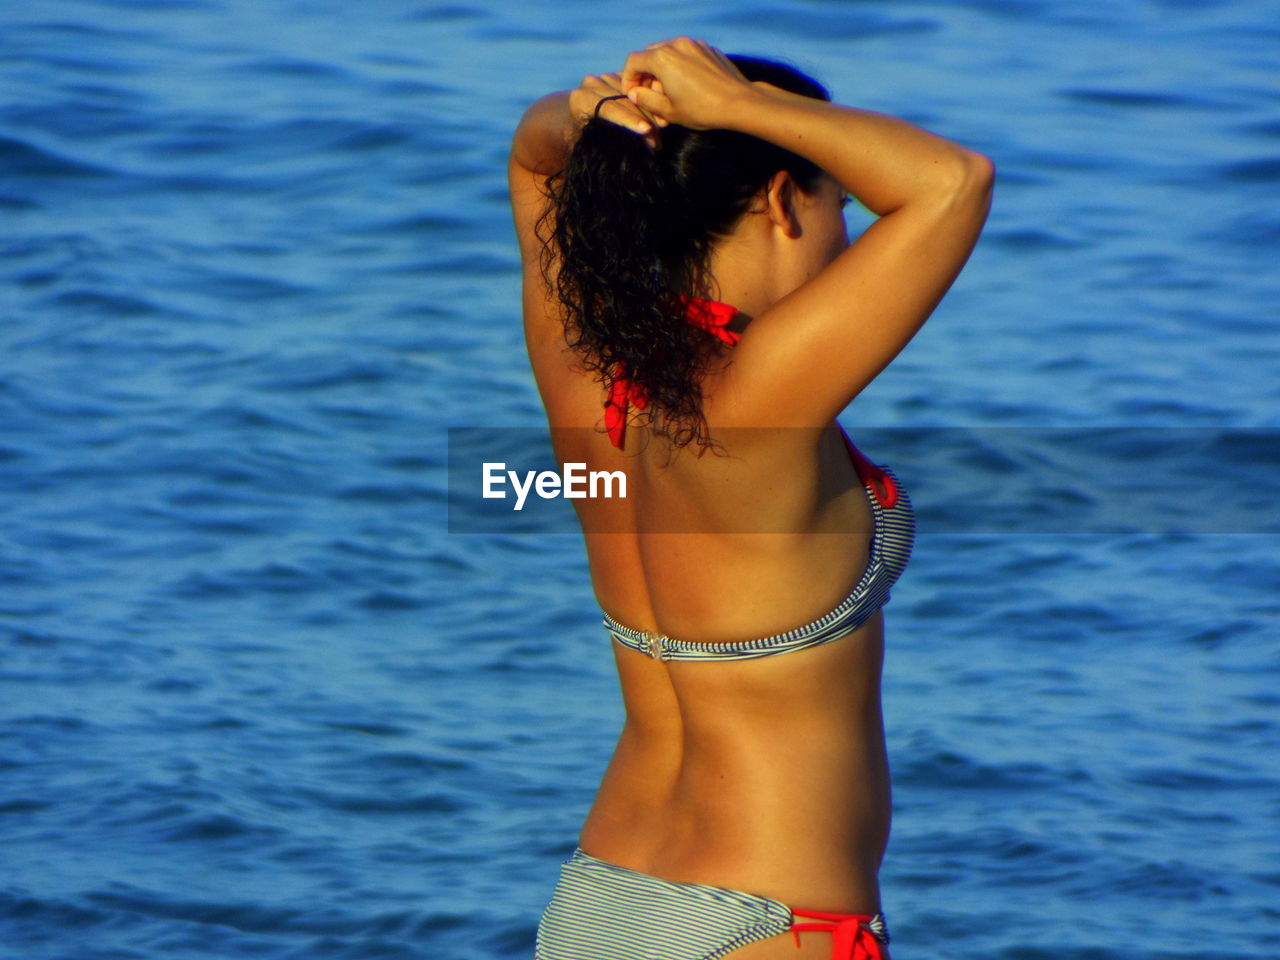 Woman in bikini standing against sea